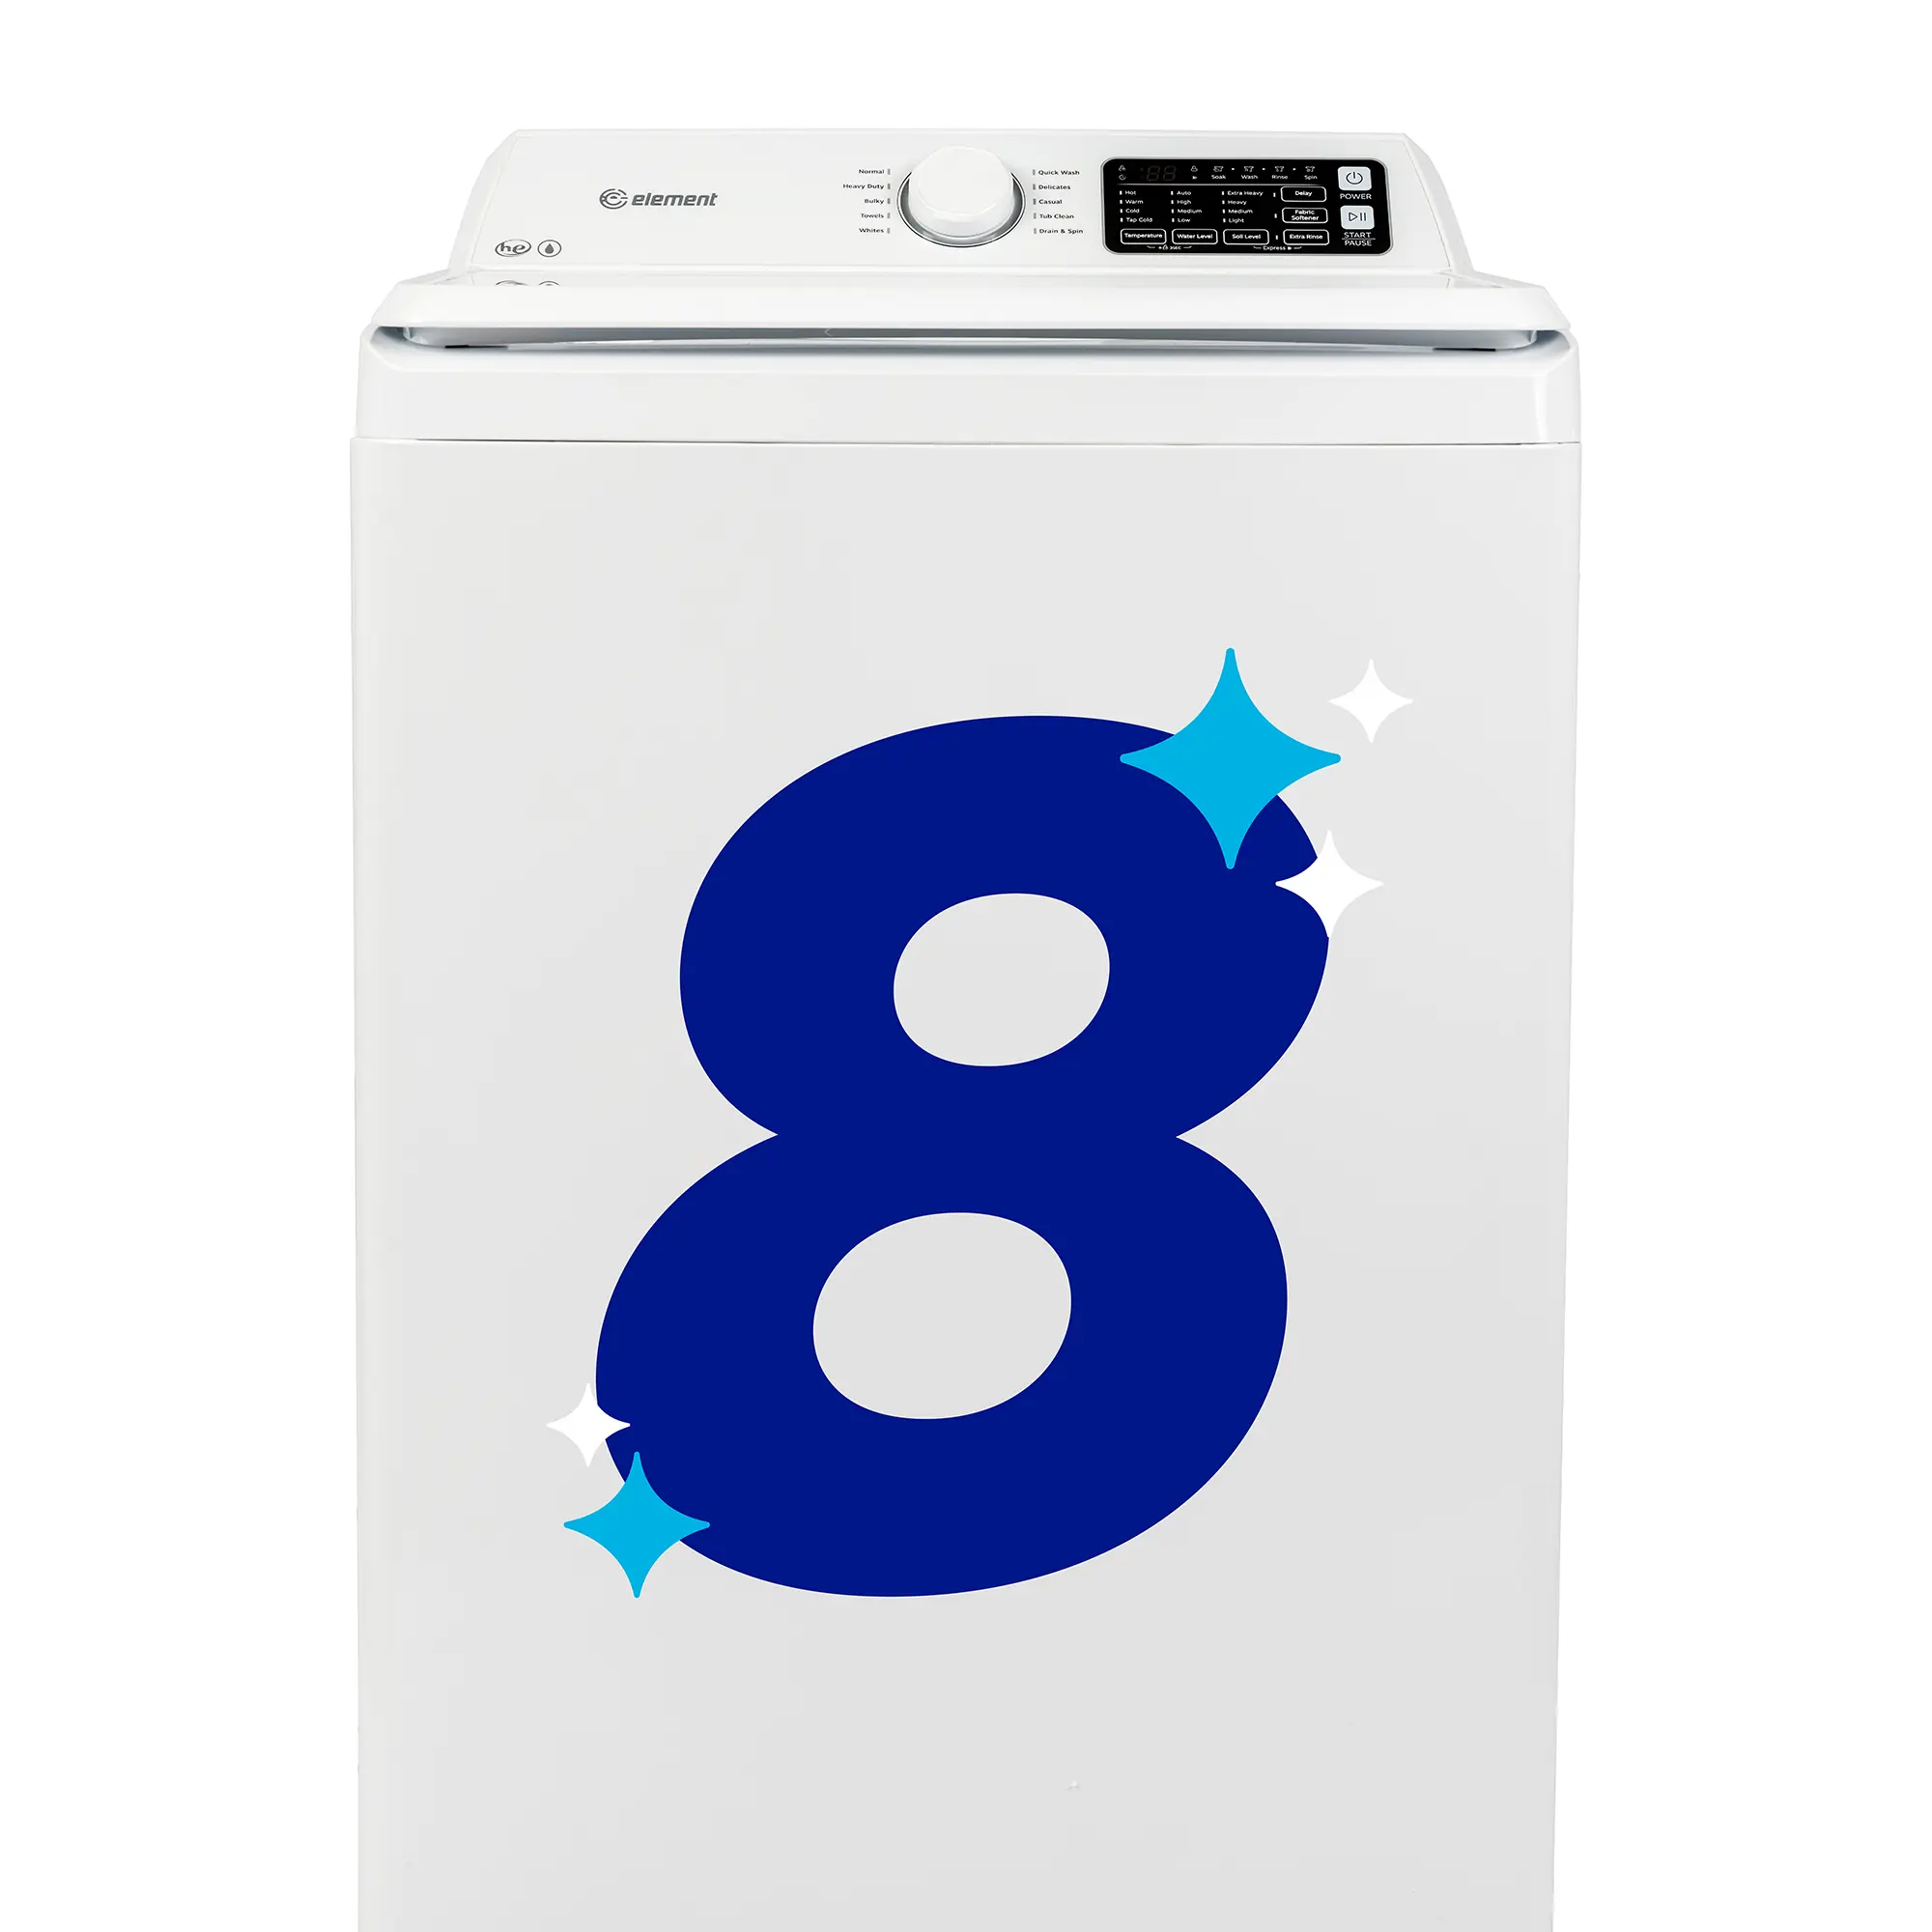 8 icon on washing machine